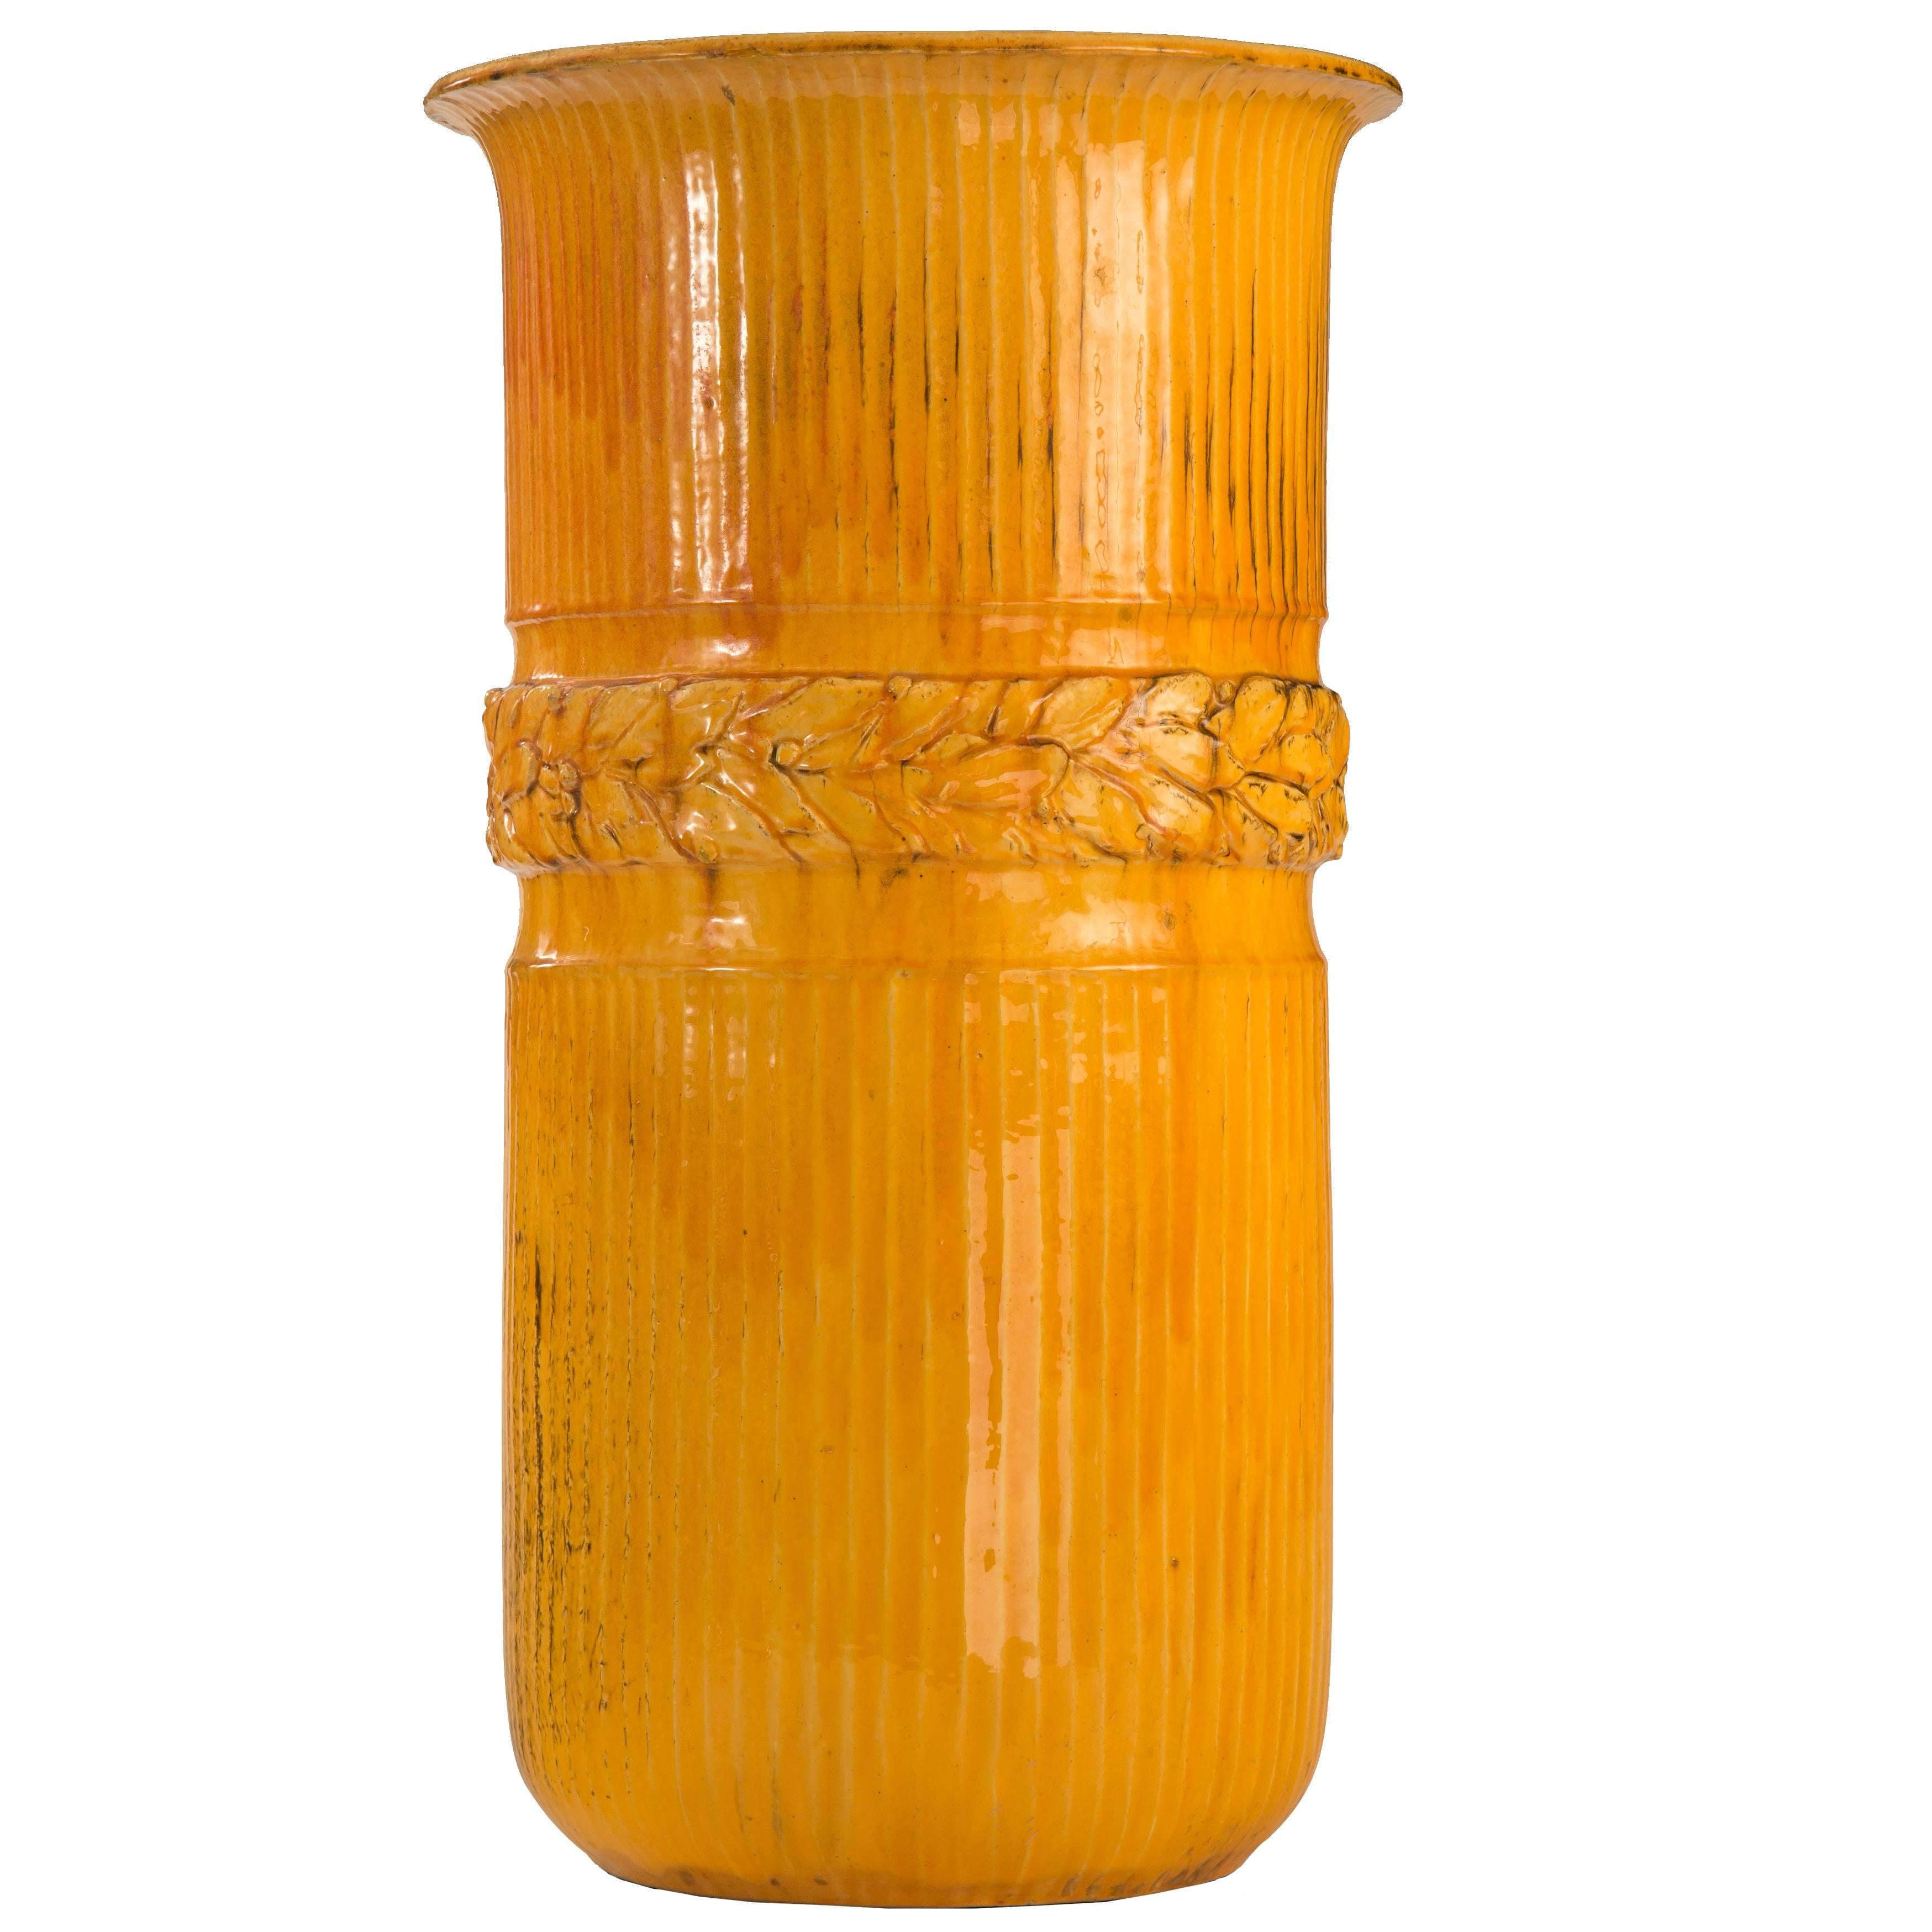 Svend Hammershøi for Kähler, Rare and Monumental Uranium Glaze Stoneware Vase